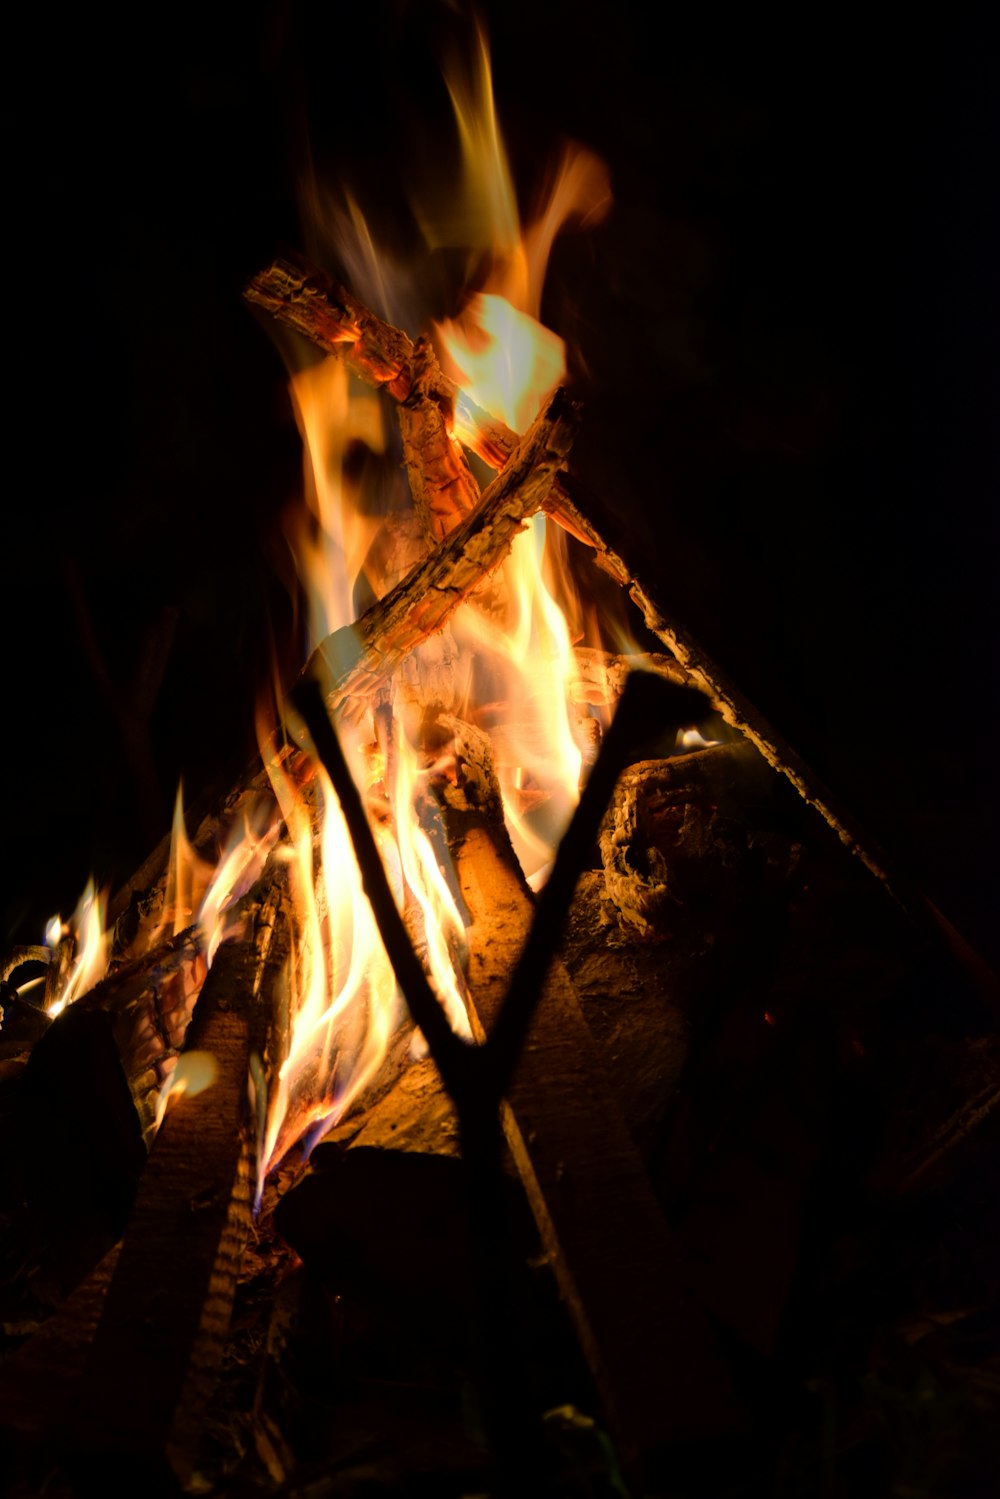 burning wood in black background